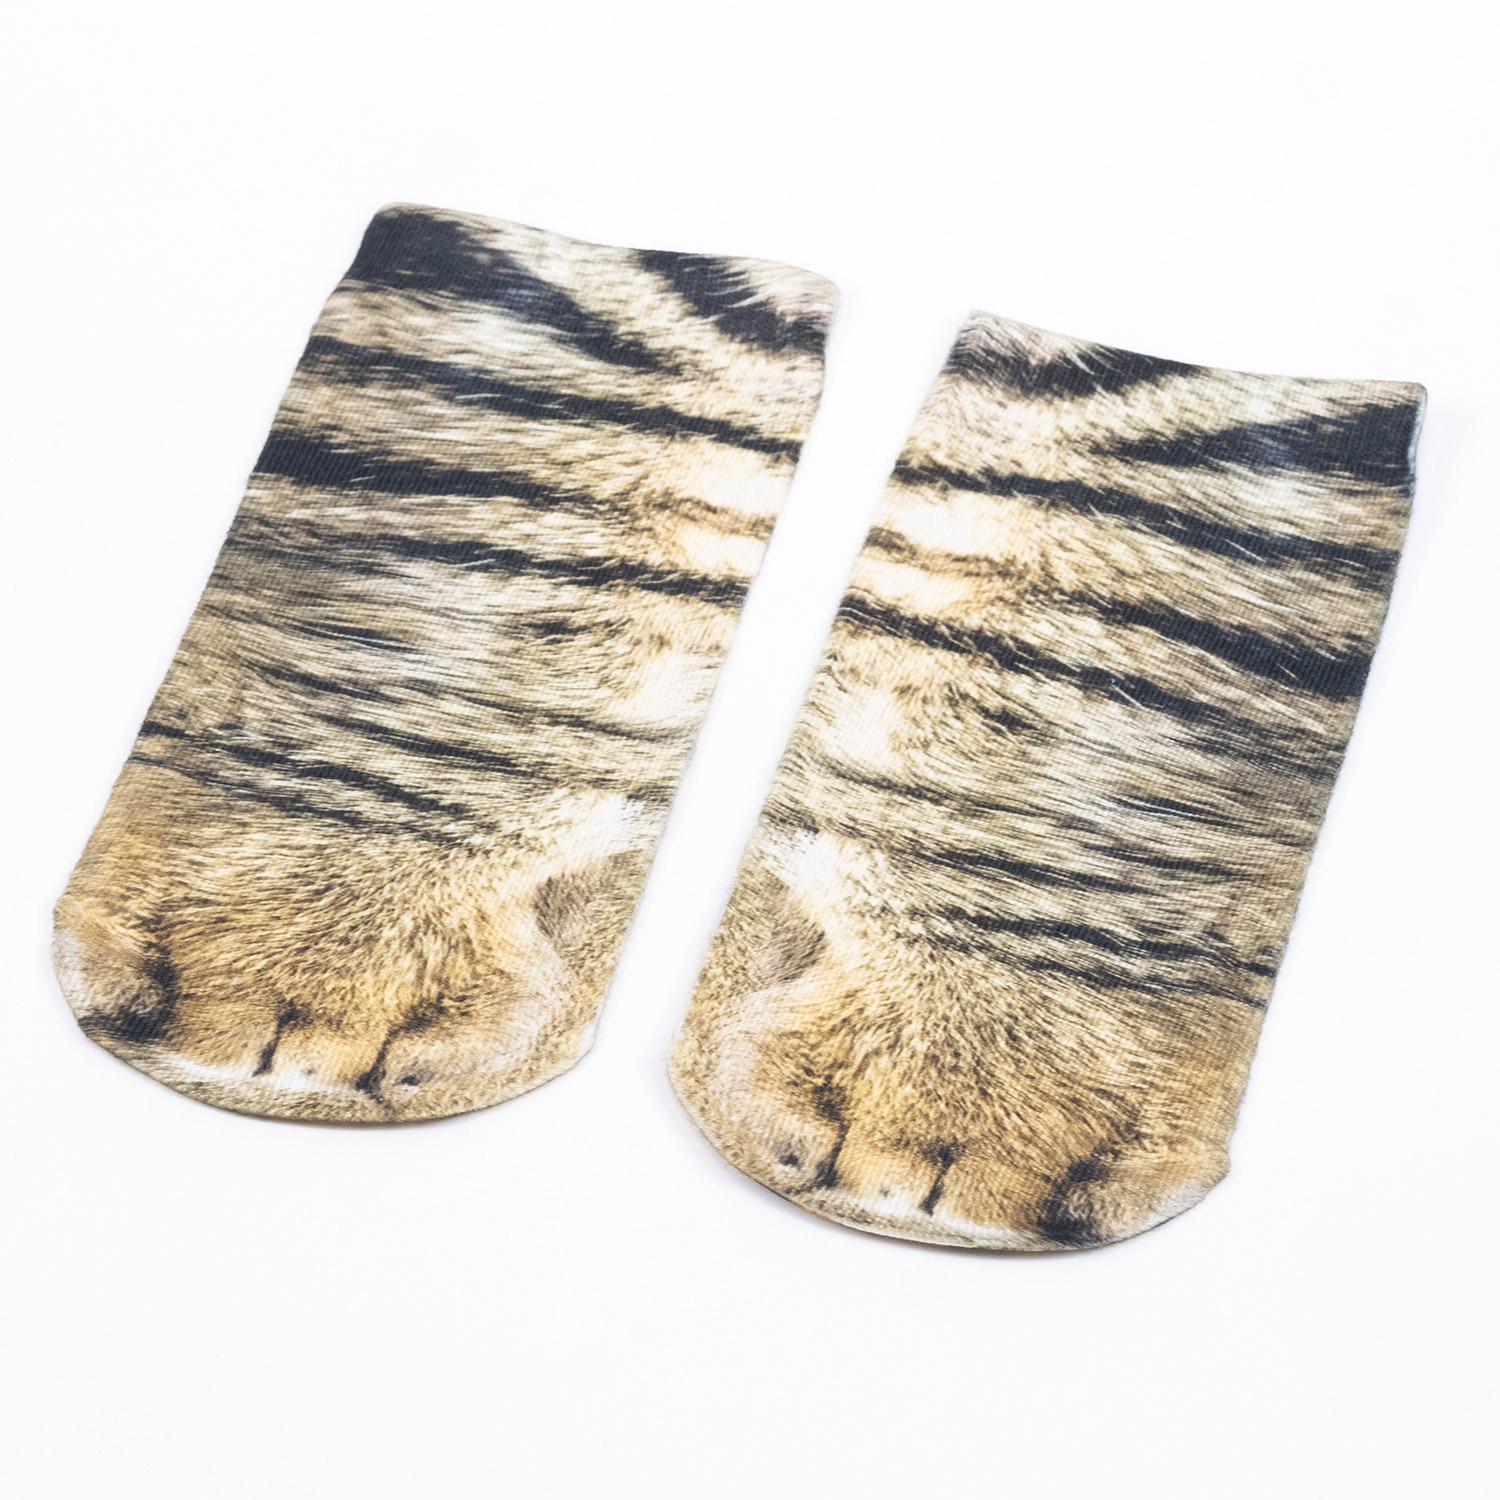 Animal Paws Socks - USA Designed Products